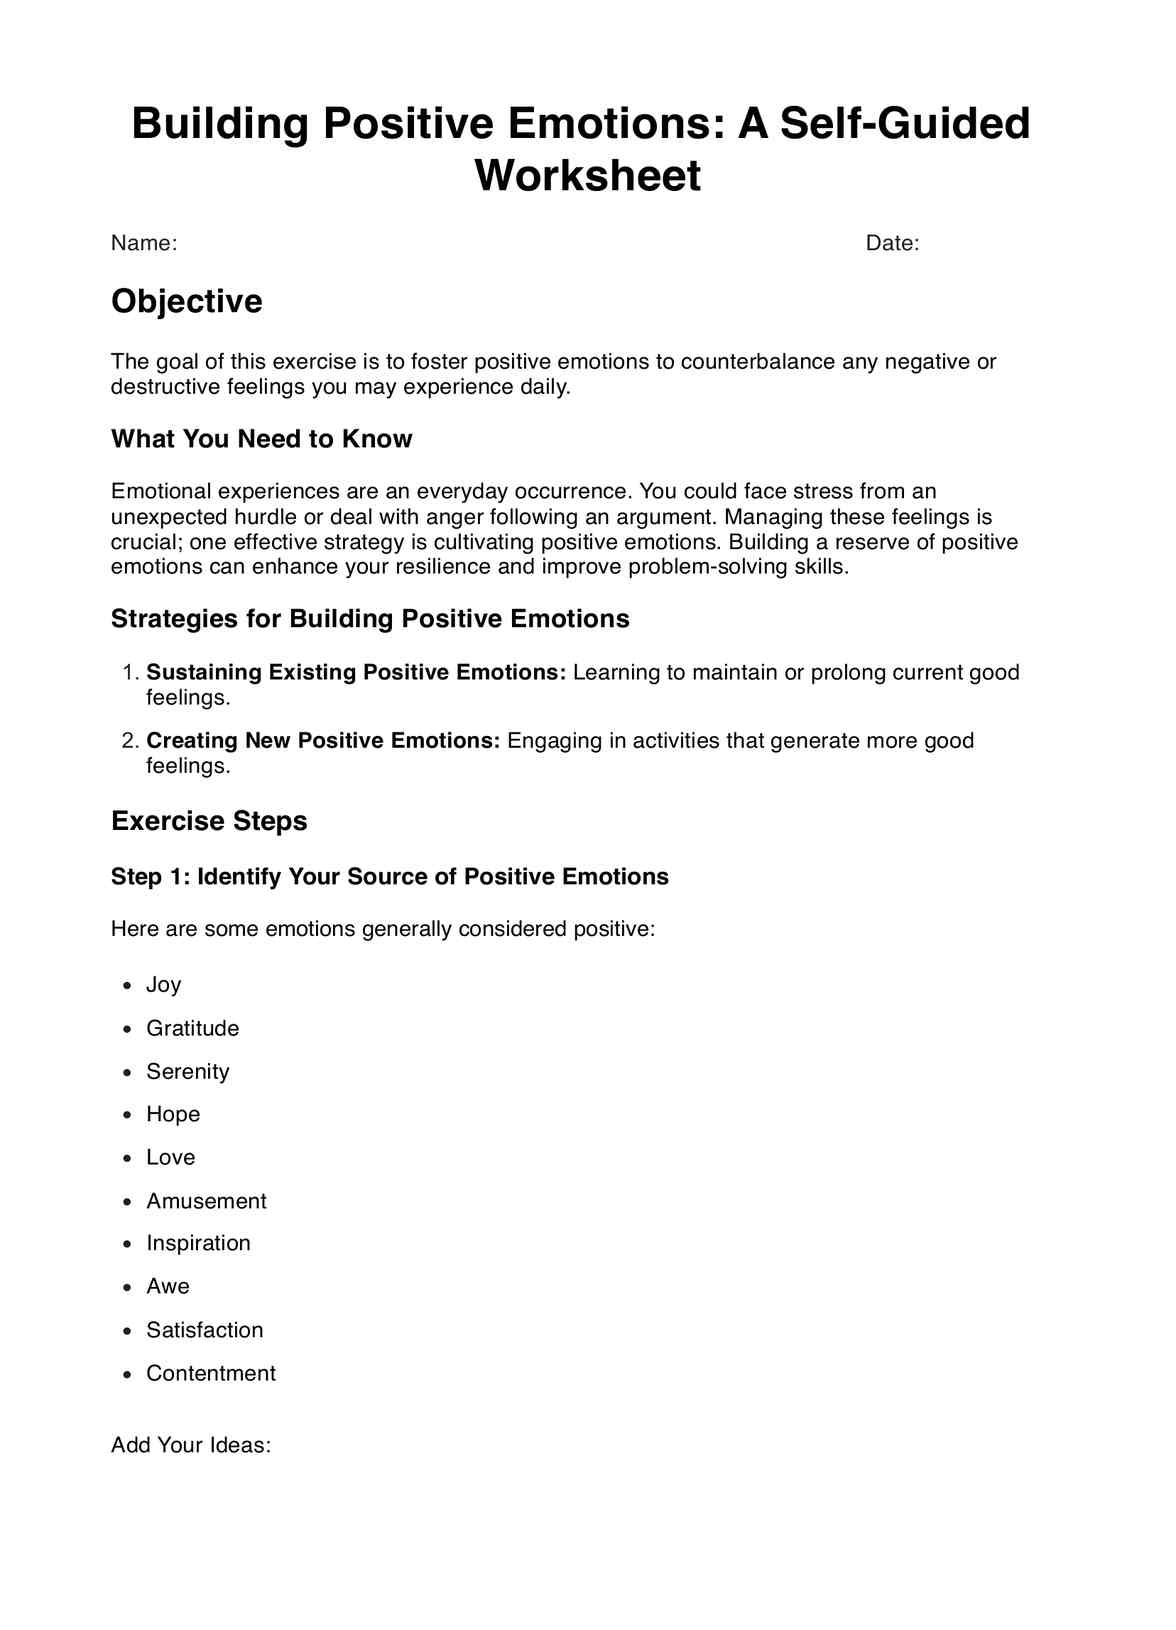 Building Positive Emotions DBT Worksheet PDF Example